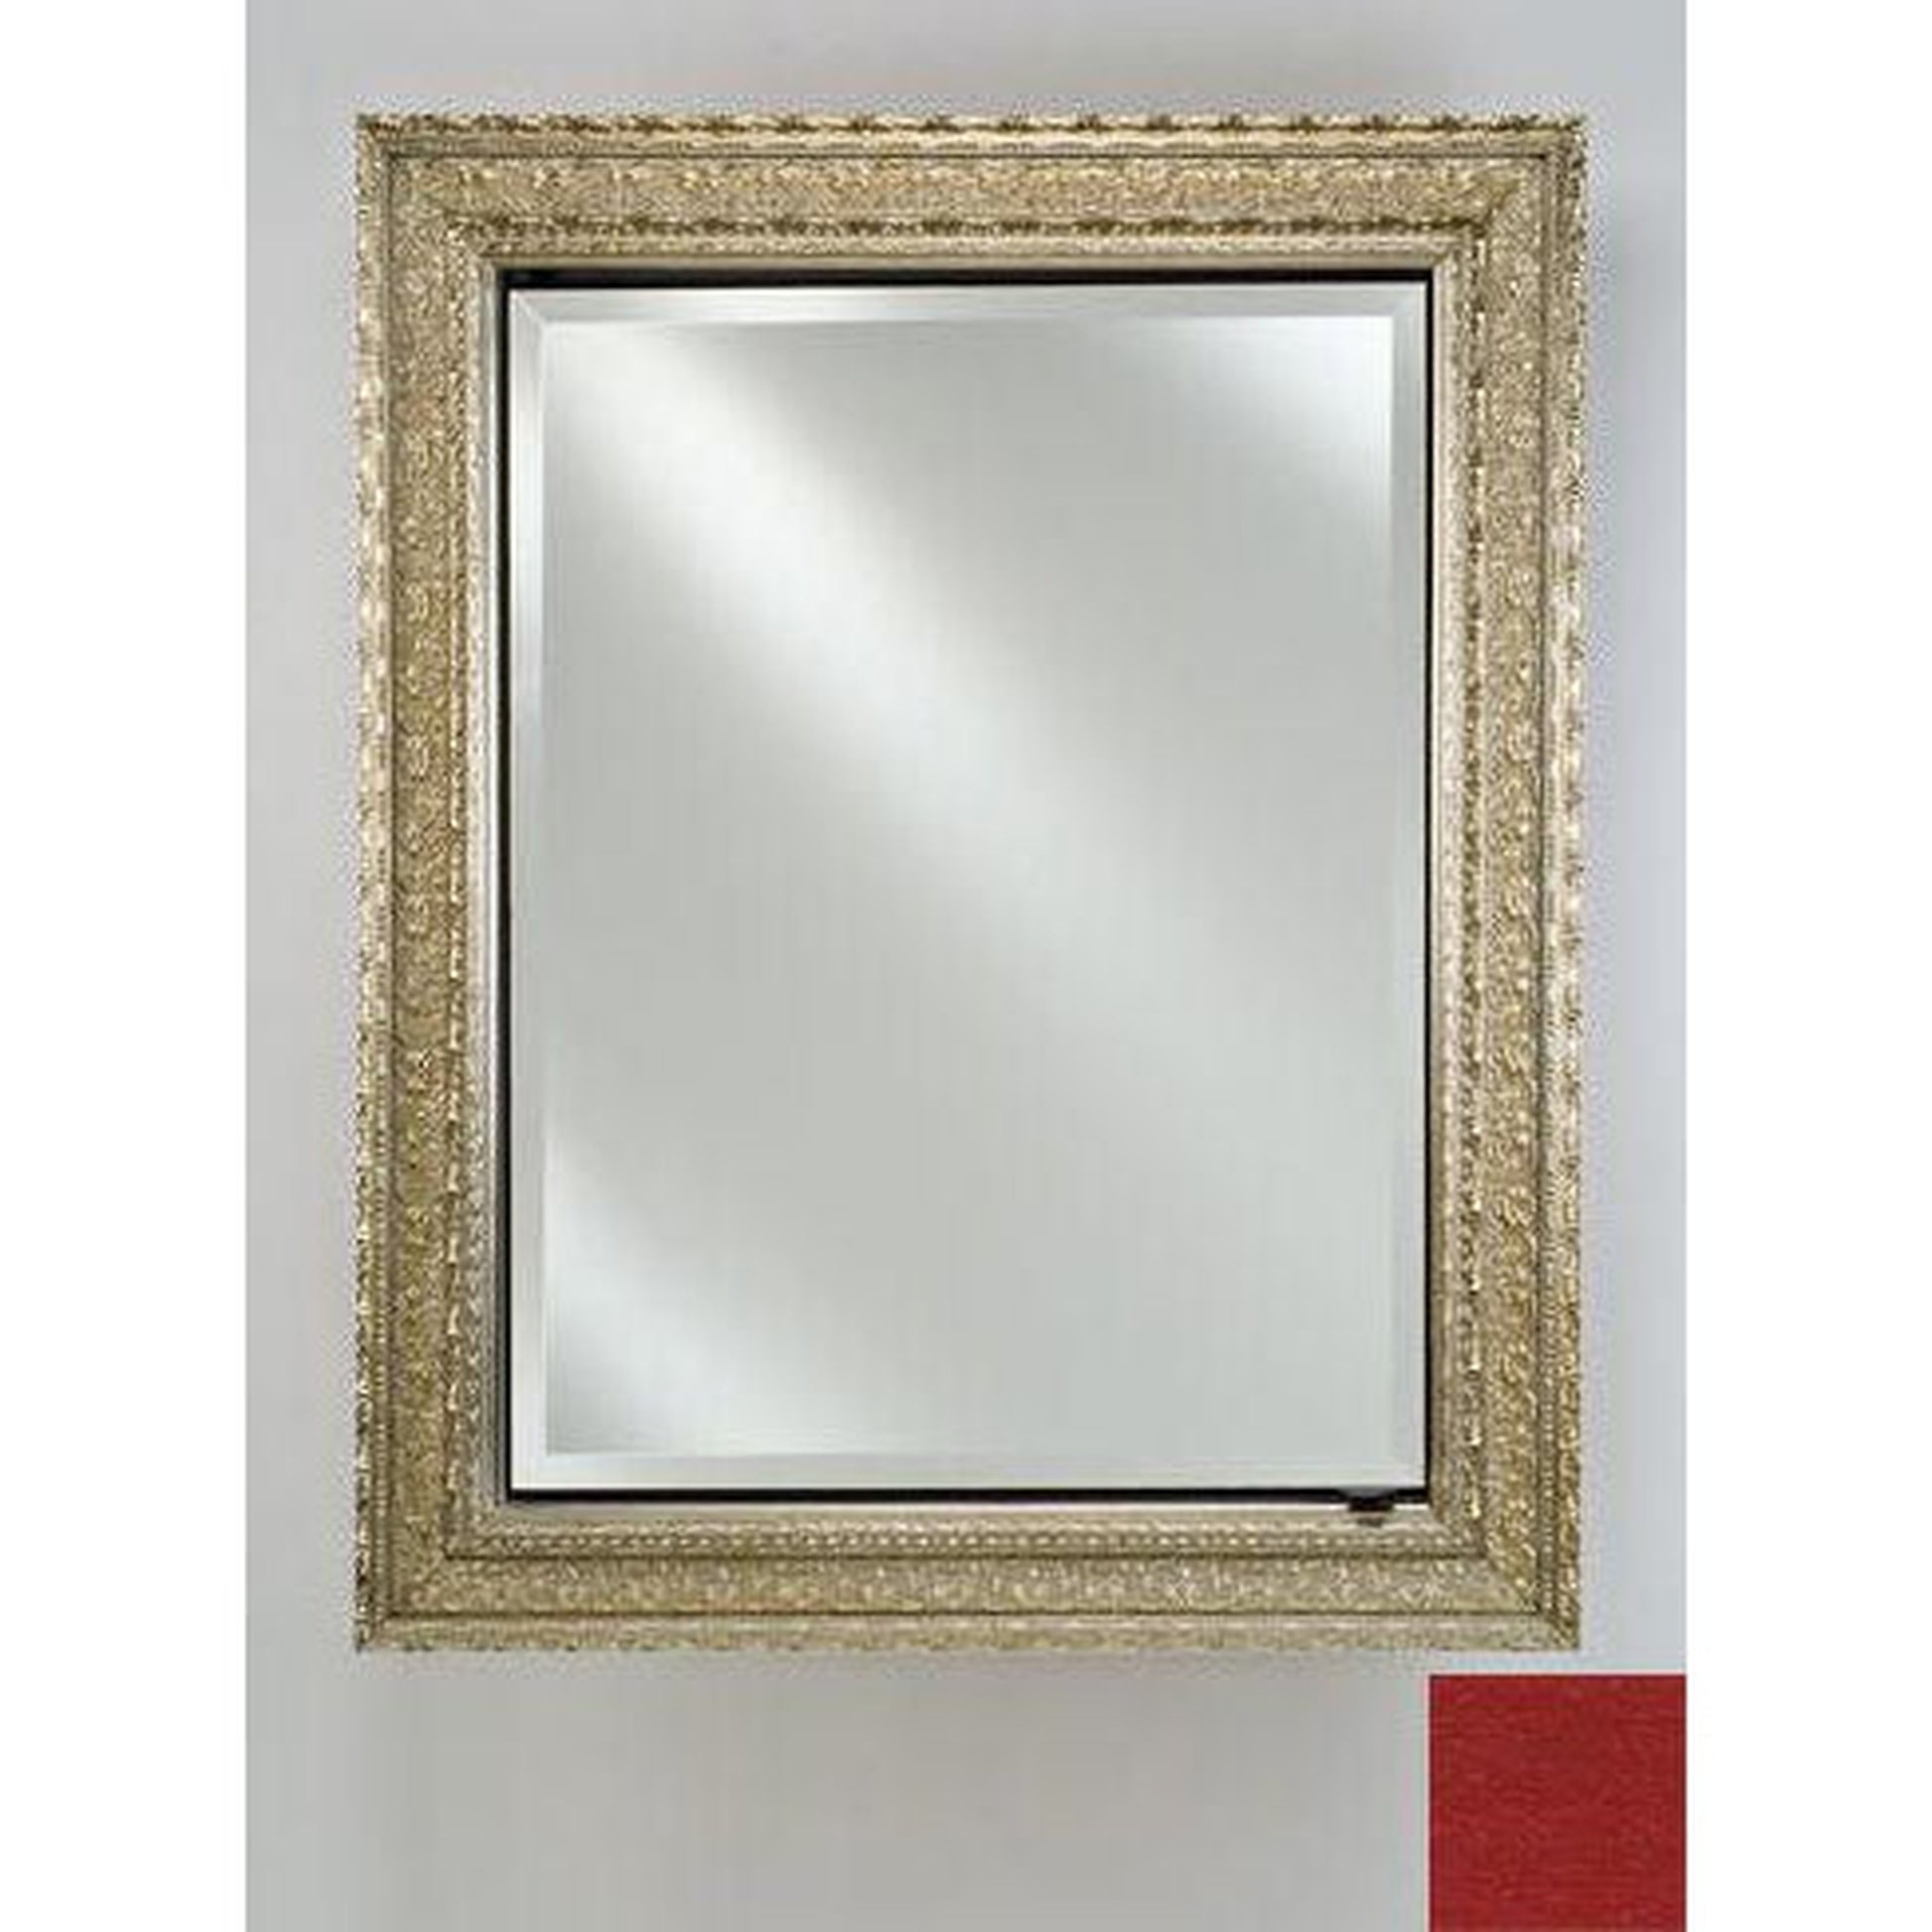 Afina Signature 24" x 30" Colorgrain Red Recessed Reversible Hinged Single Door Medicine Cabinet With Beveled Edge Mirror